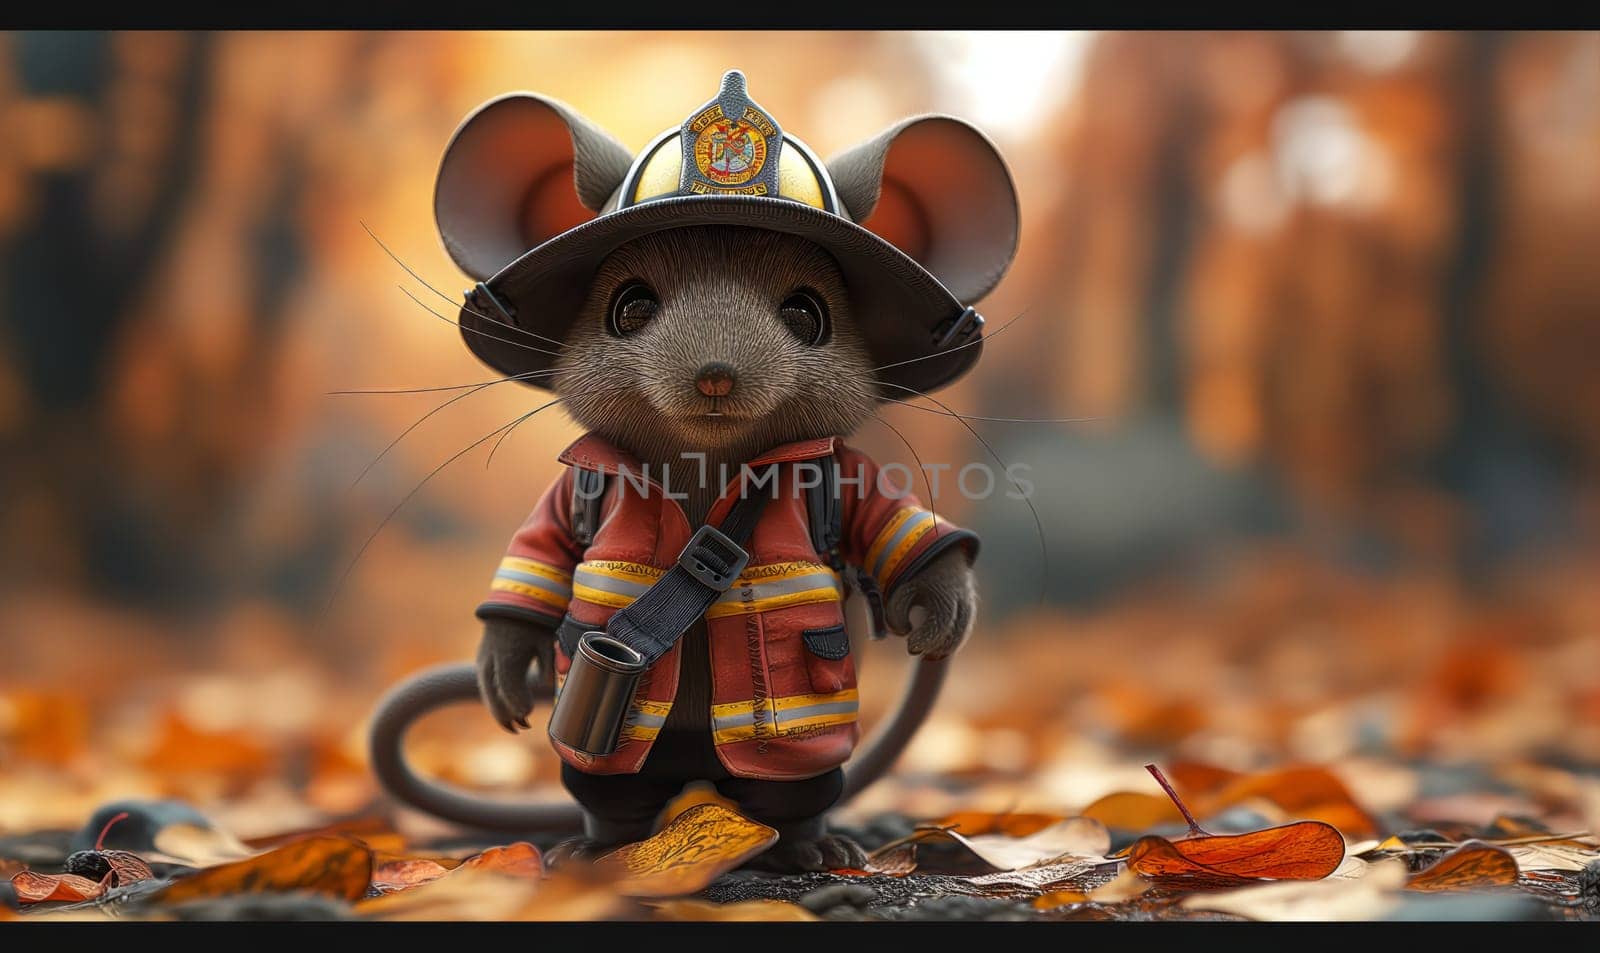 Illustration, mouse fireman on a blurred background. Selective soft focus.